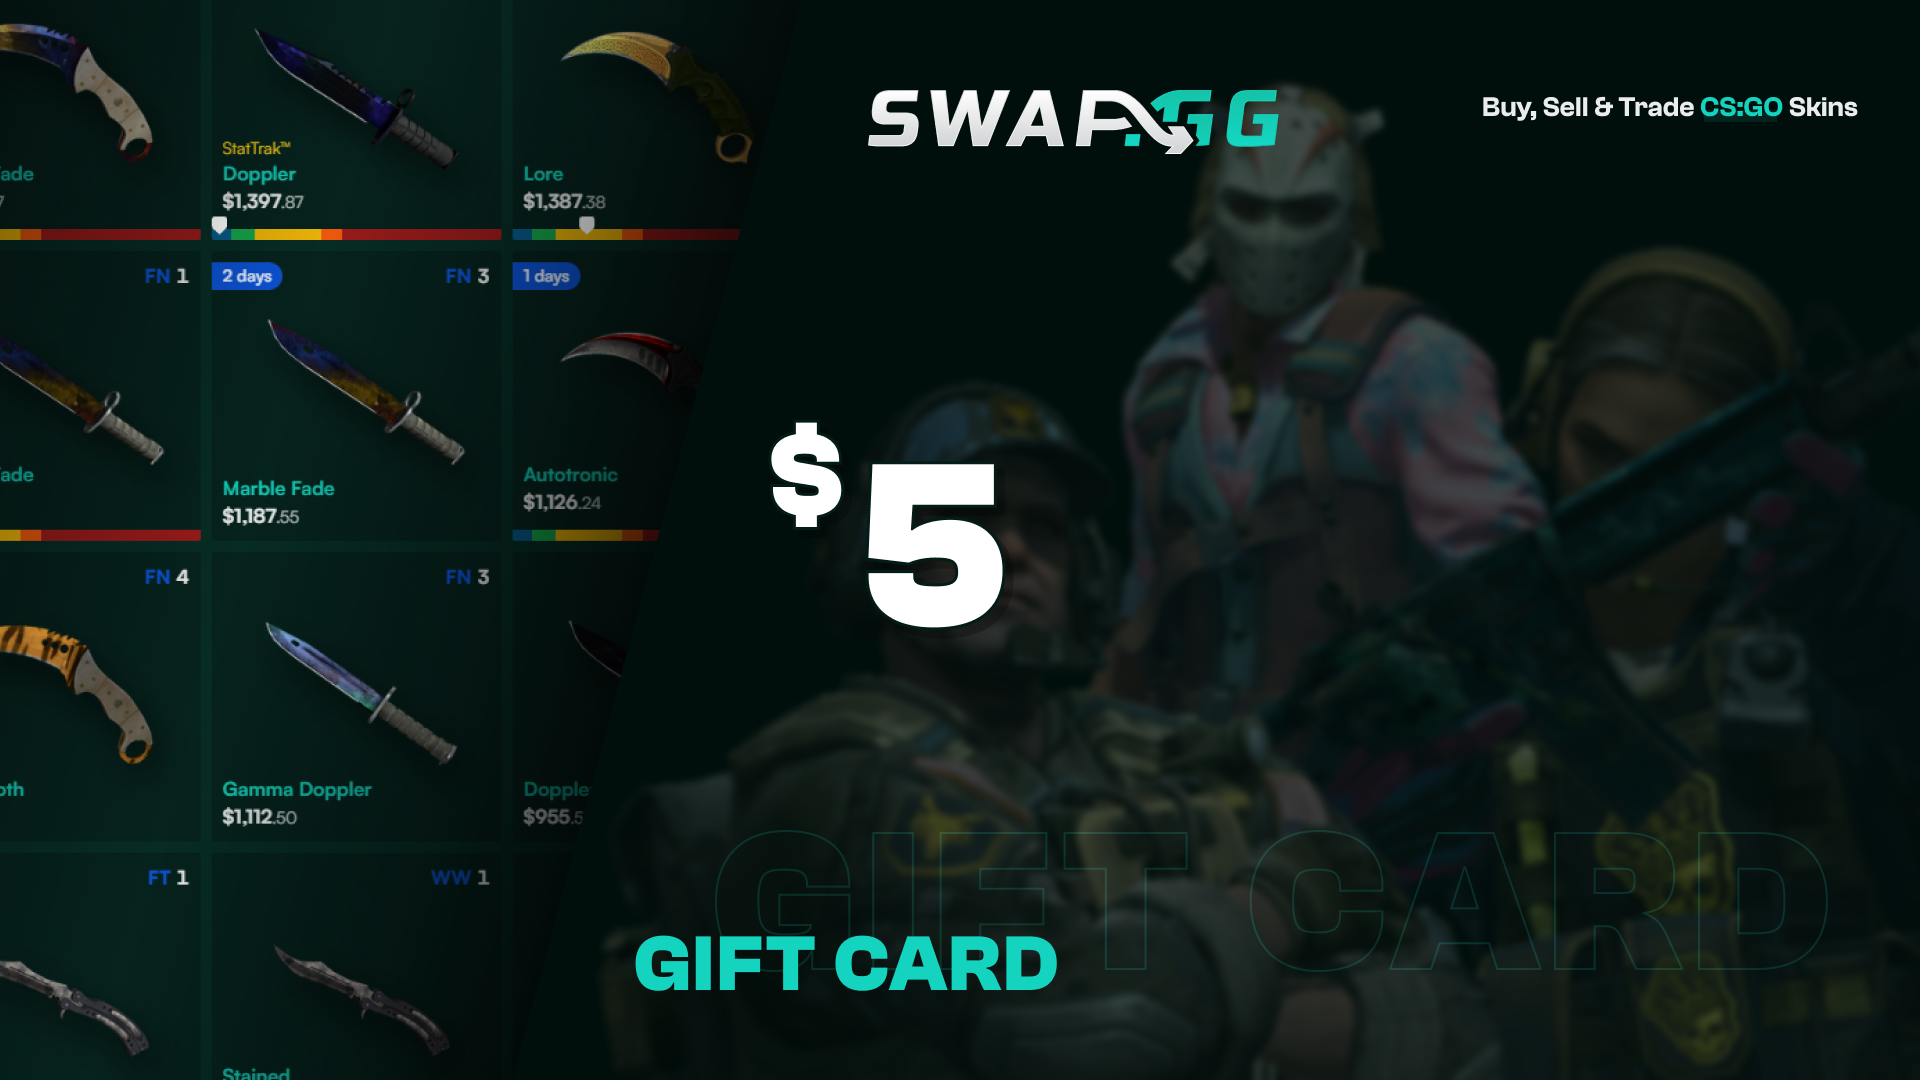 [$ 3.97] Swap.gg $5 Gift Card